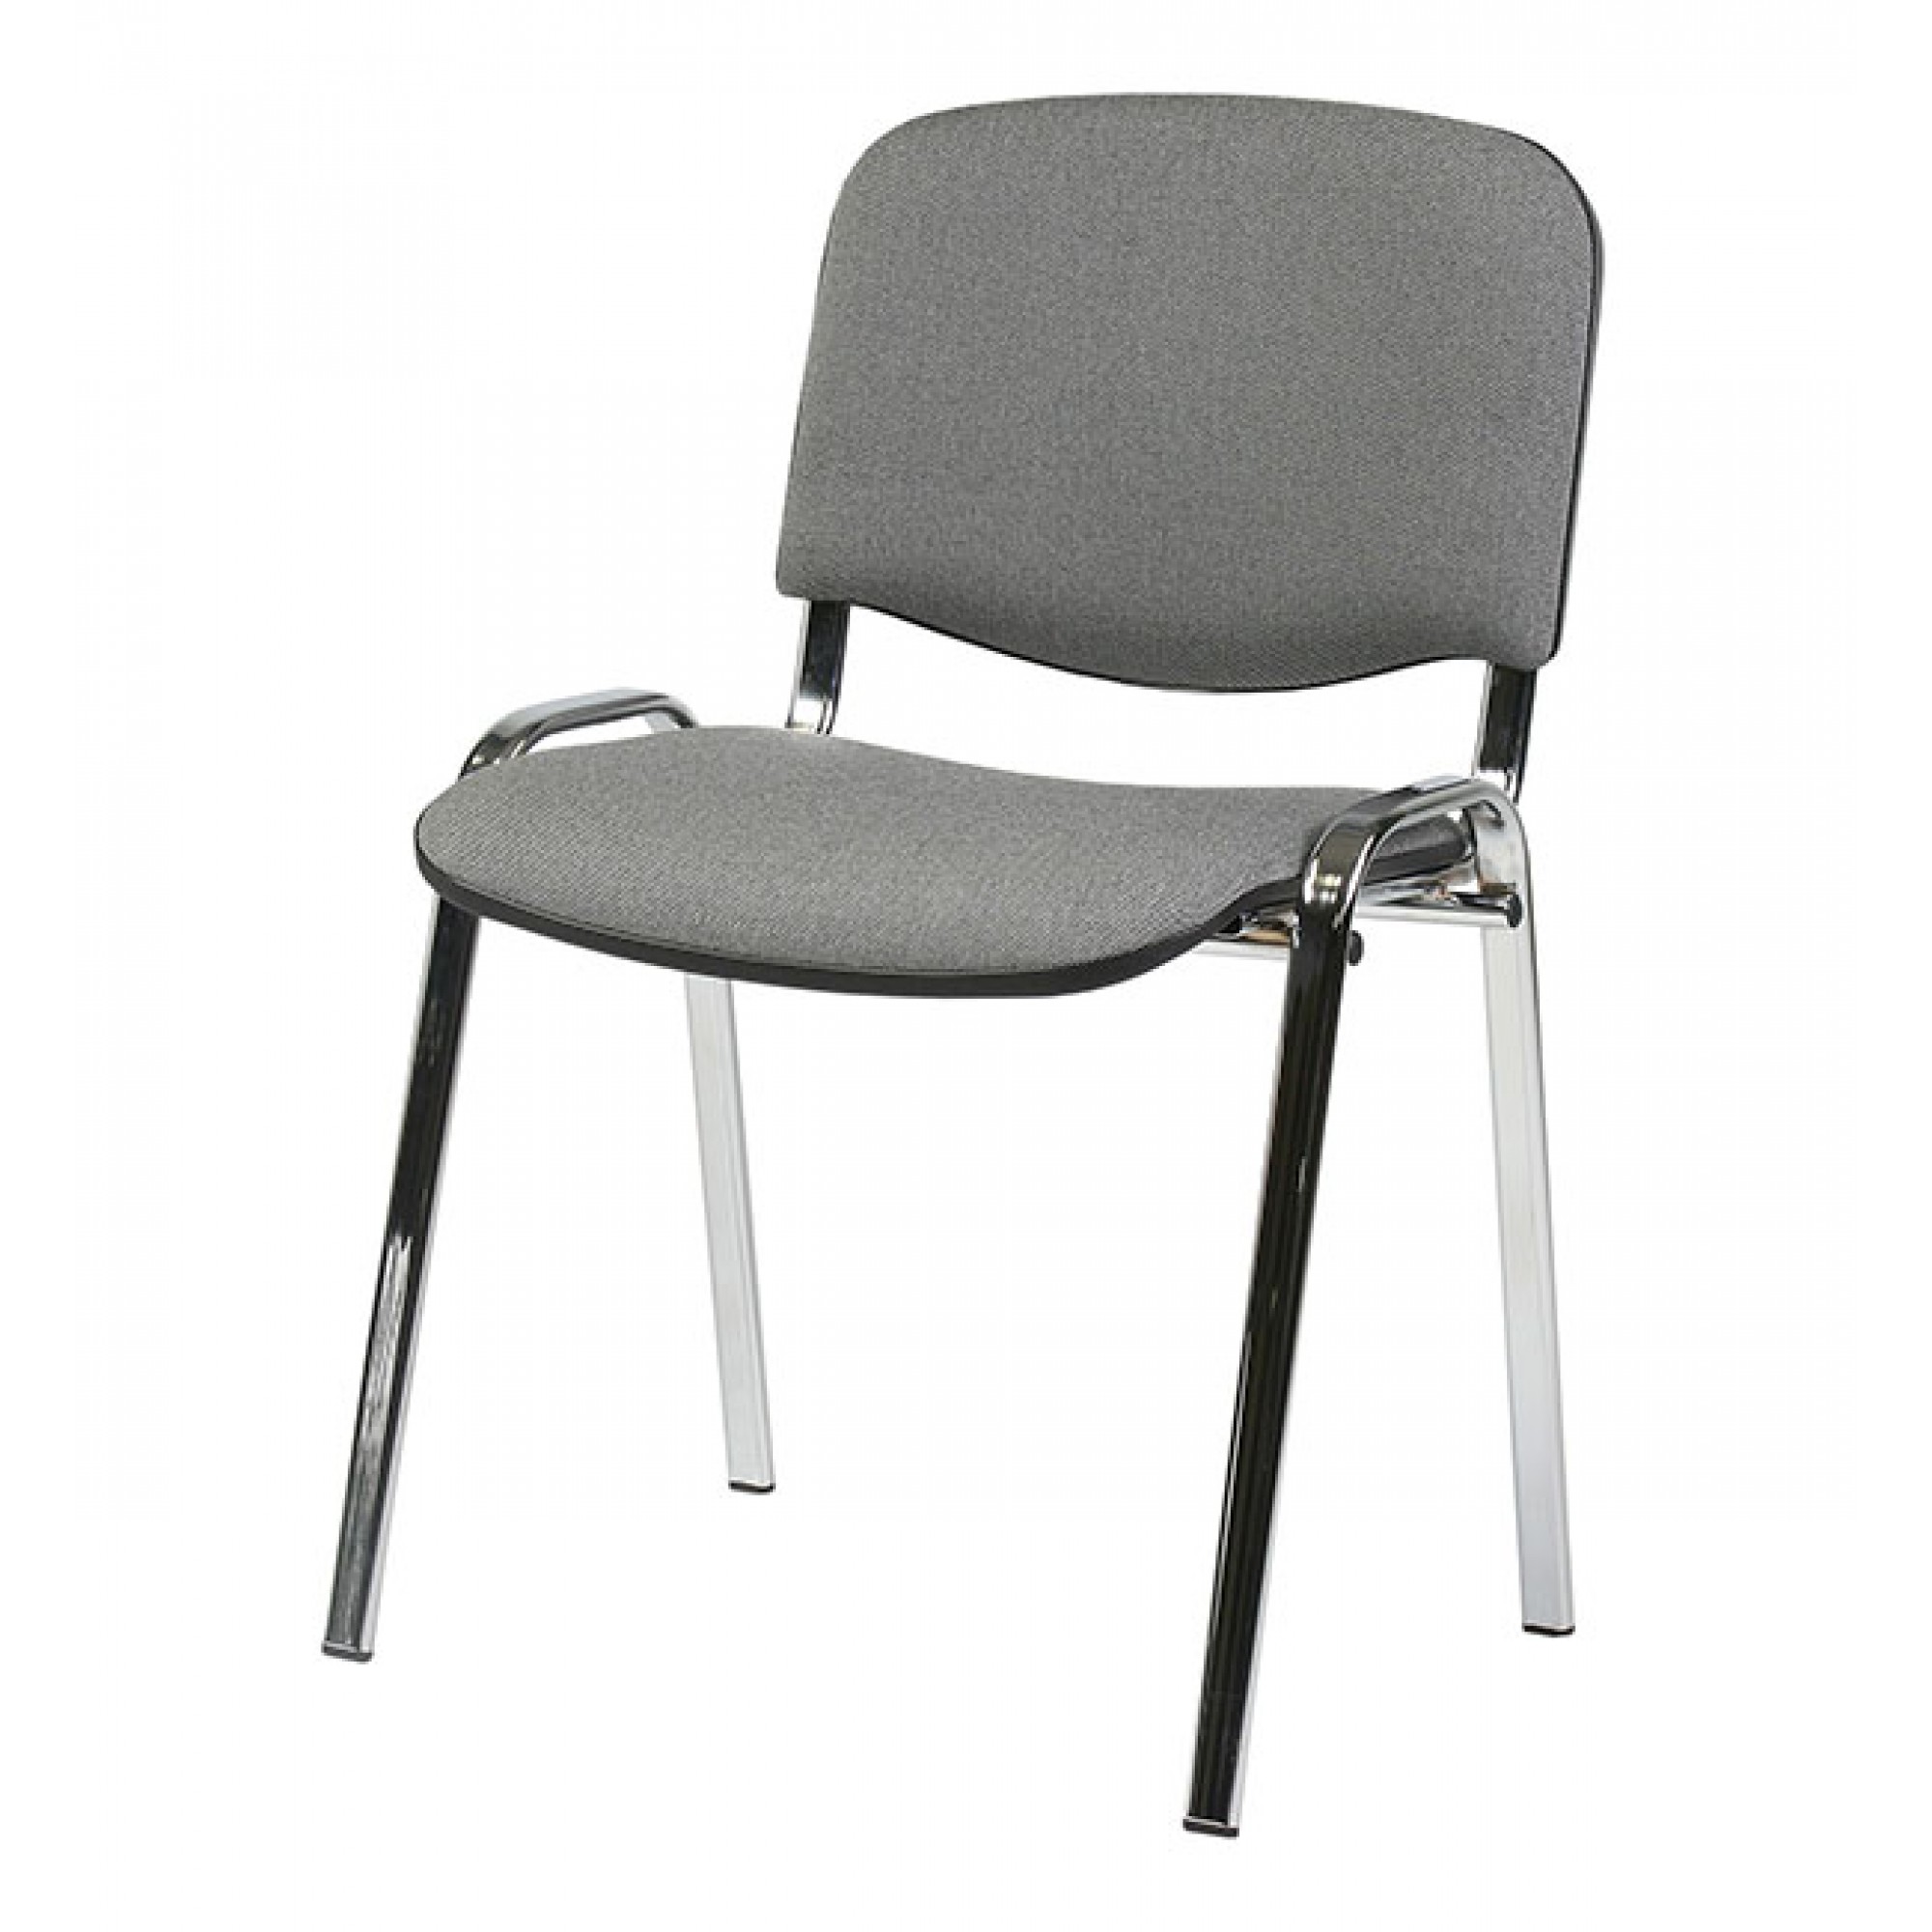 Стул офисный chair. Изо, каркас хром / ткань c73 серый. Стул офисный изо ткань (в-14(ТК-1) чёрный). Стул изо (кожзам PV-1 черный, каркас черный). Стул офисный easy Chair изо с73.